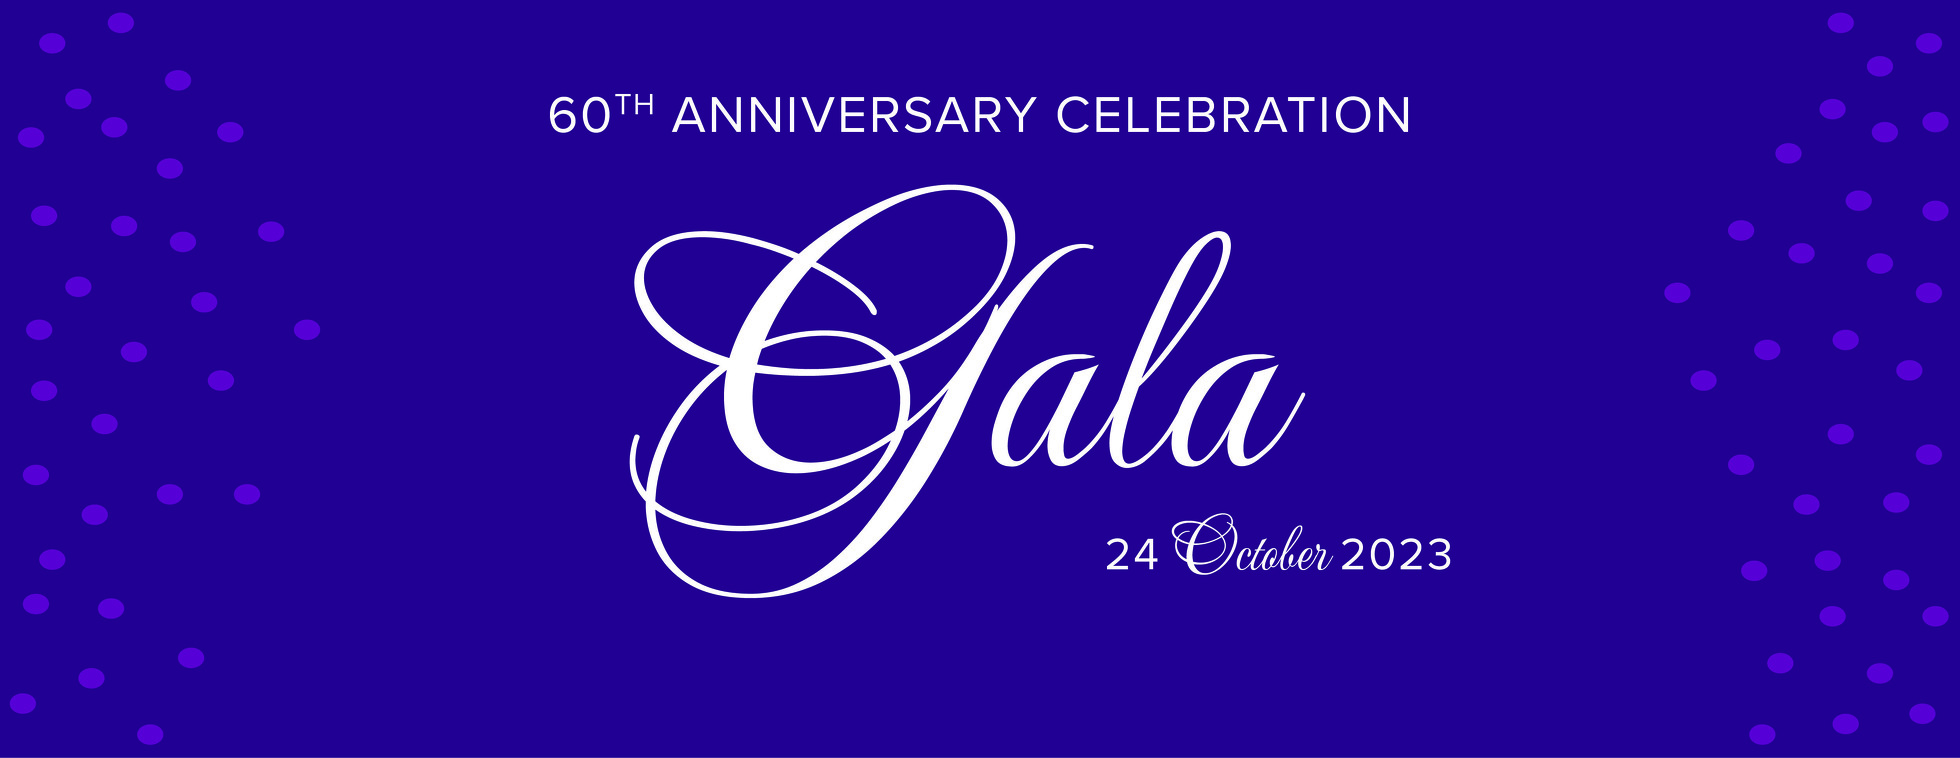 60th Anniversary Gala